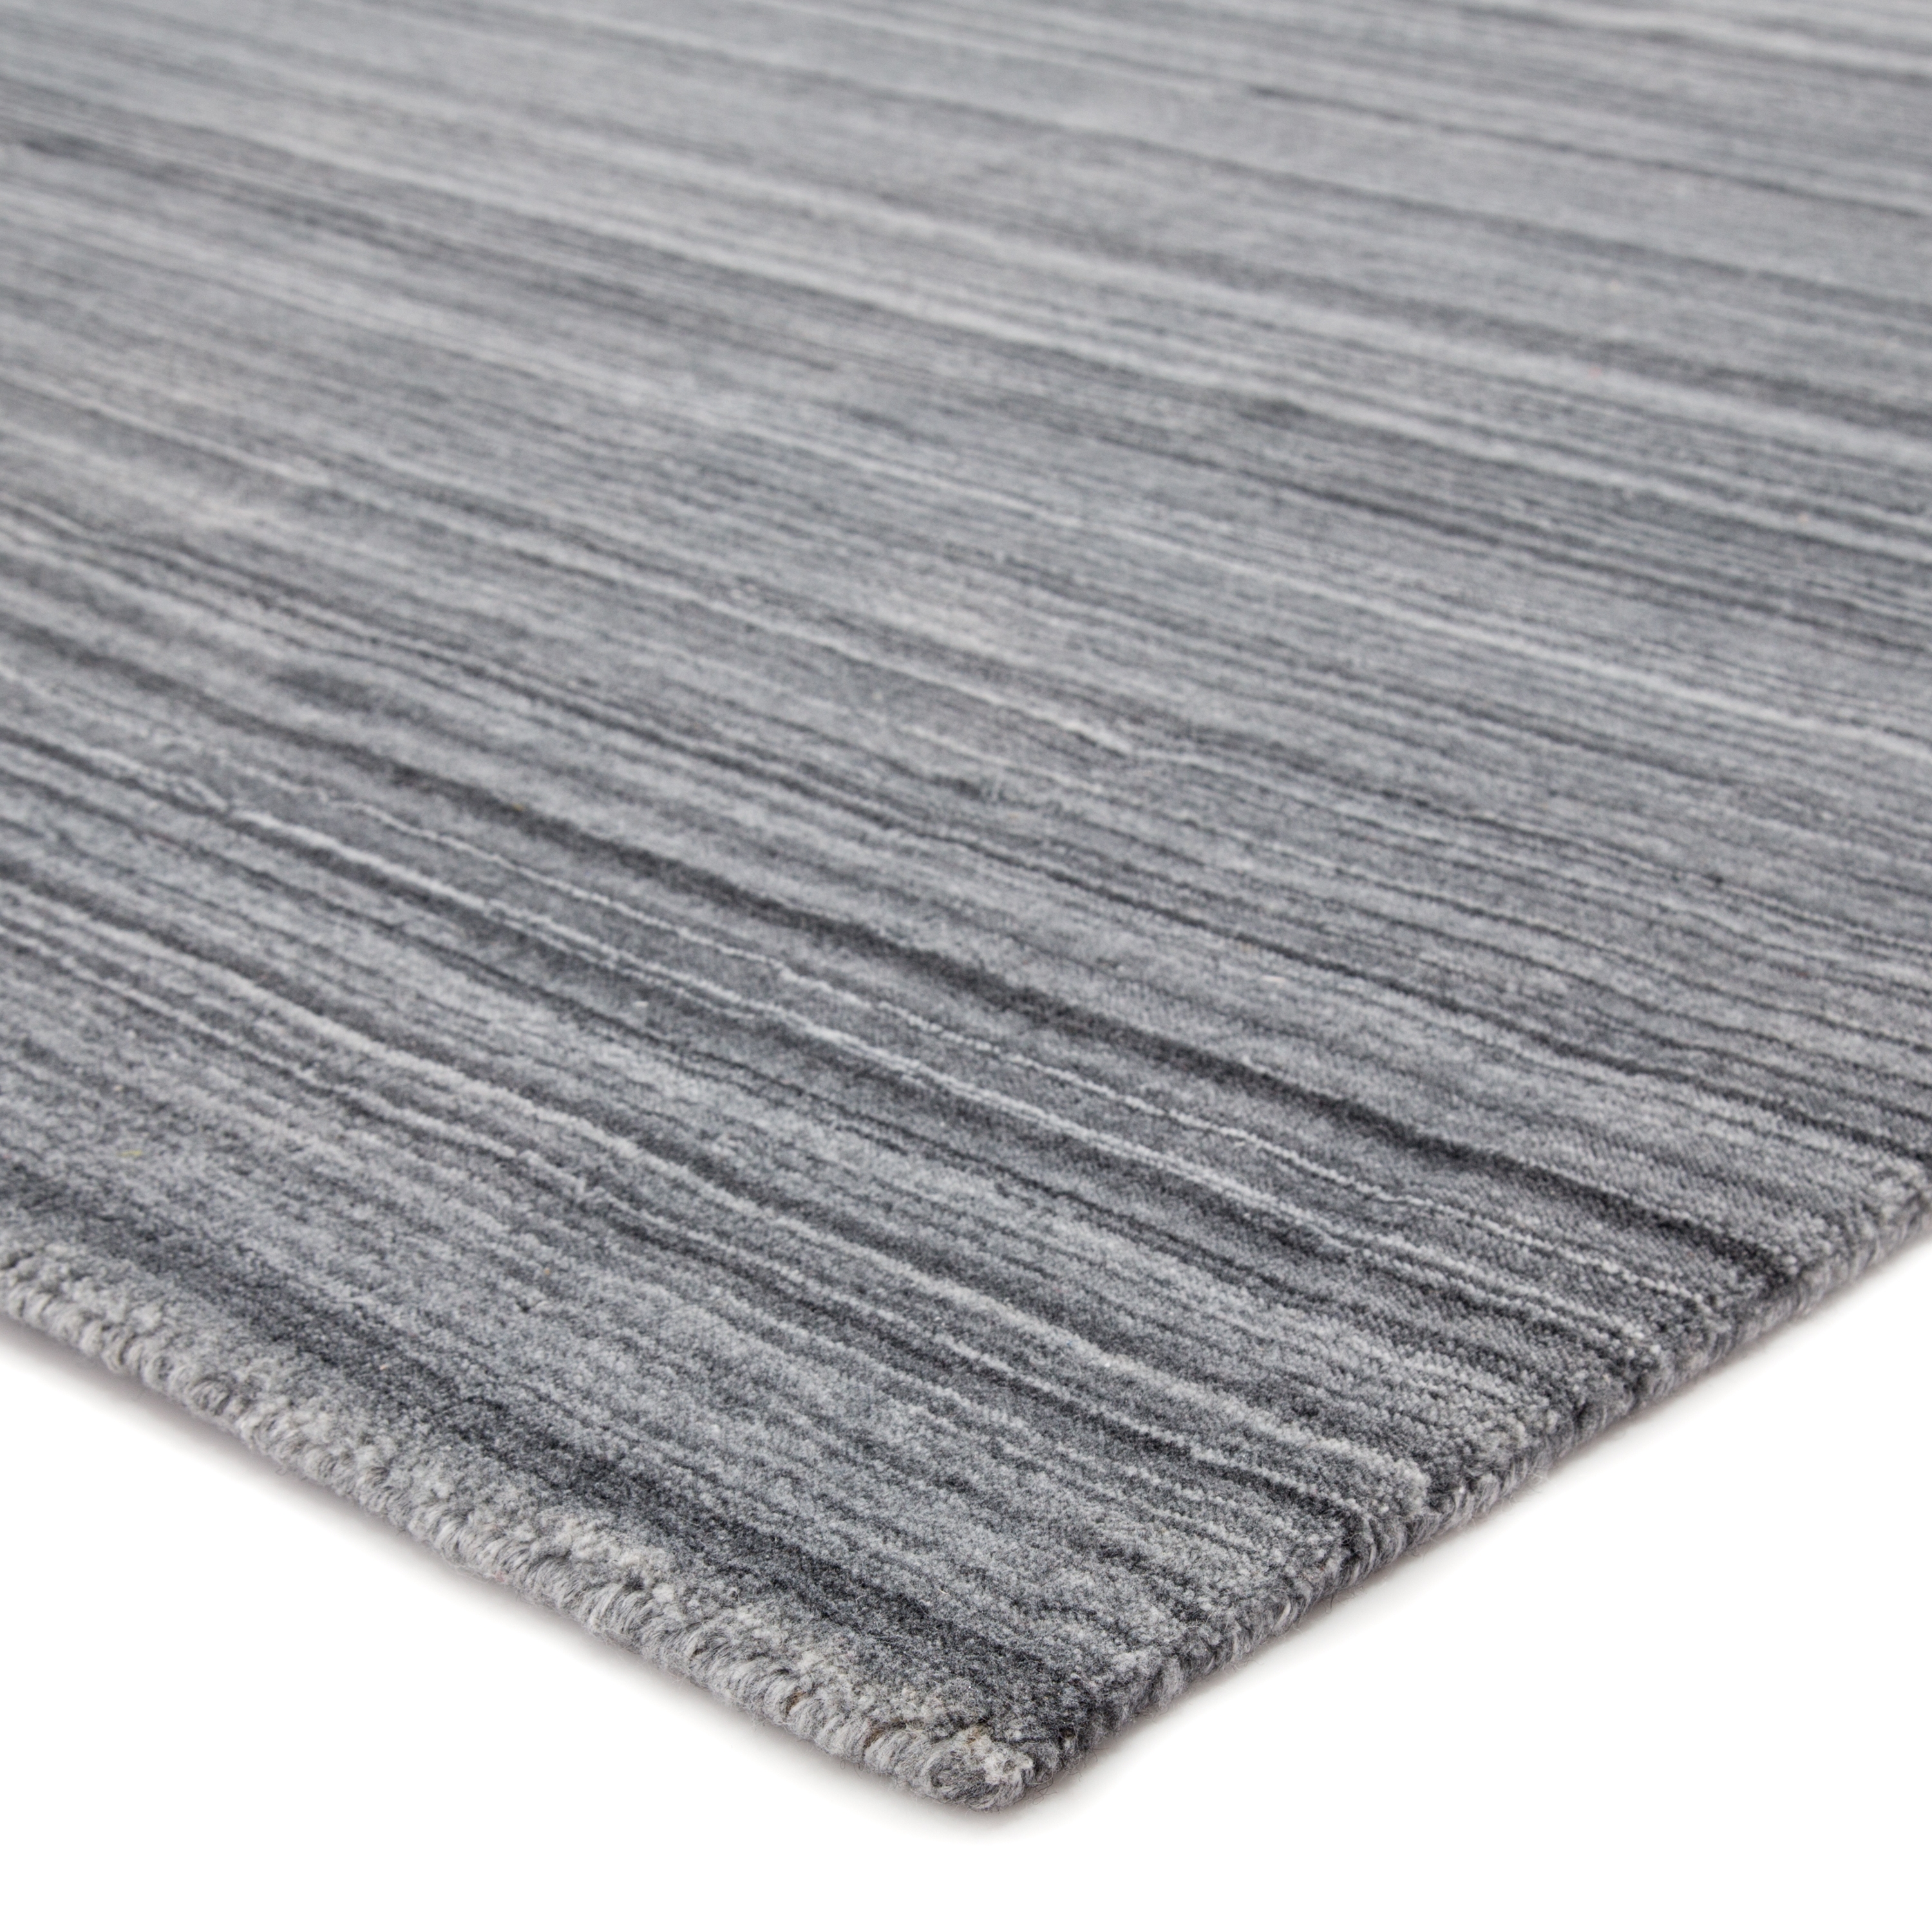 Tundra Handmade Solid Dark Gray/ Silver Area Rug (9'X12') - Image 1